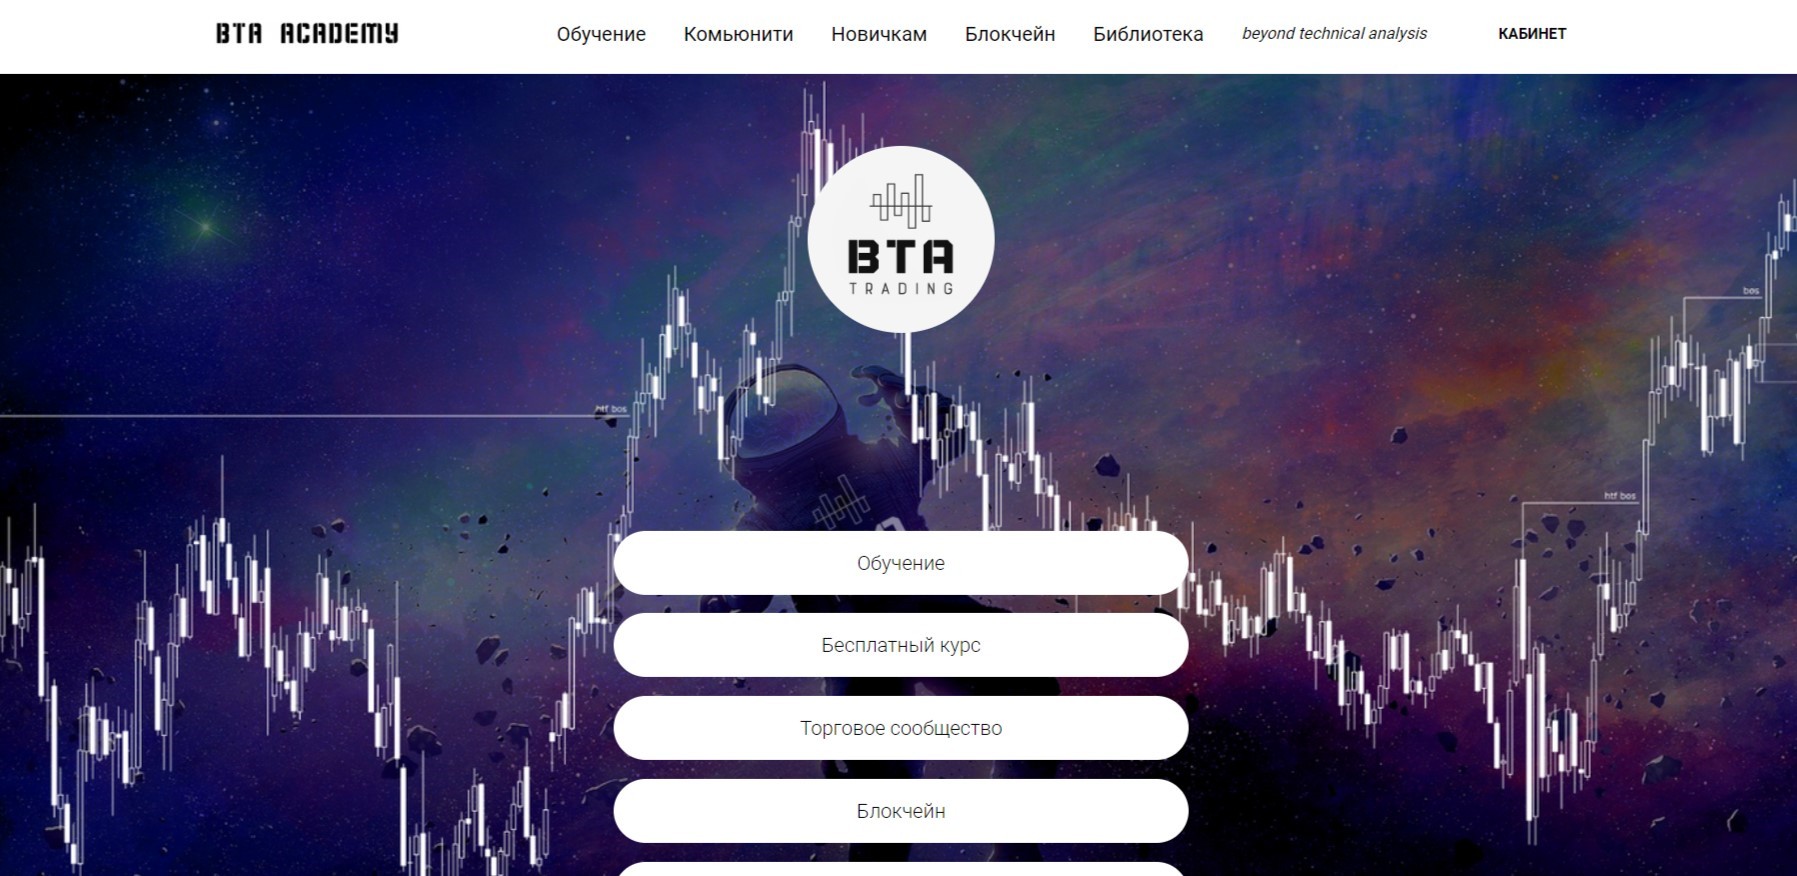 Bta trading обзор проекта